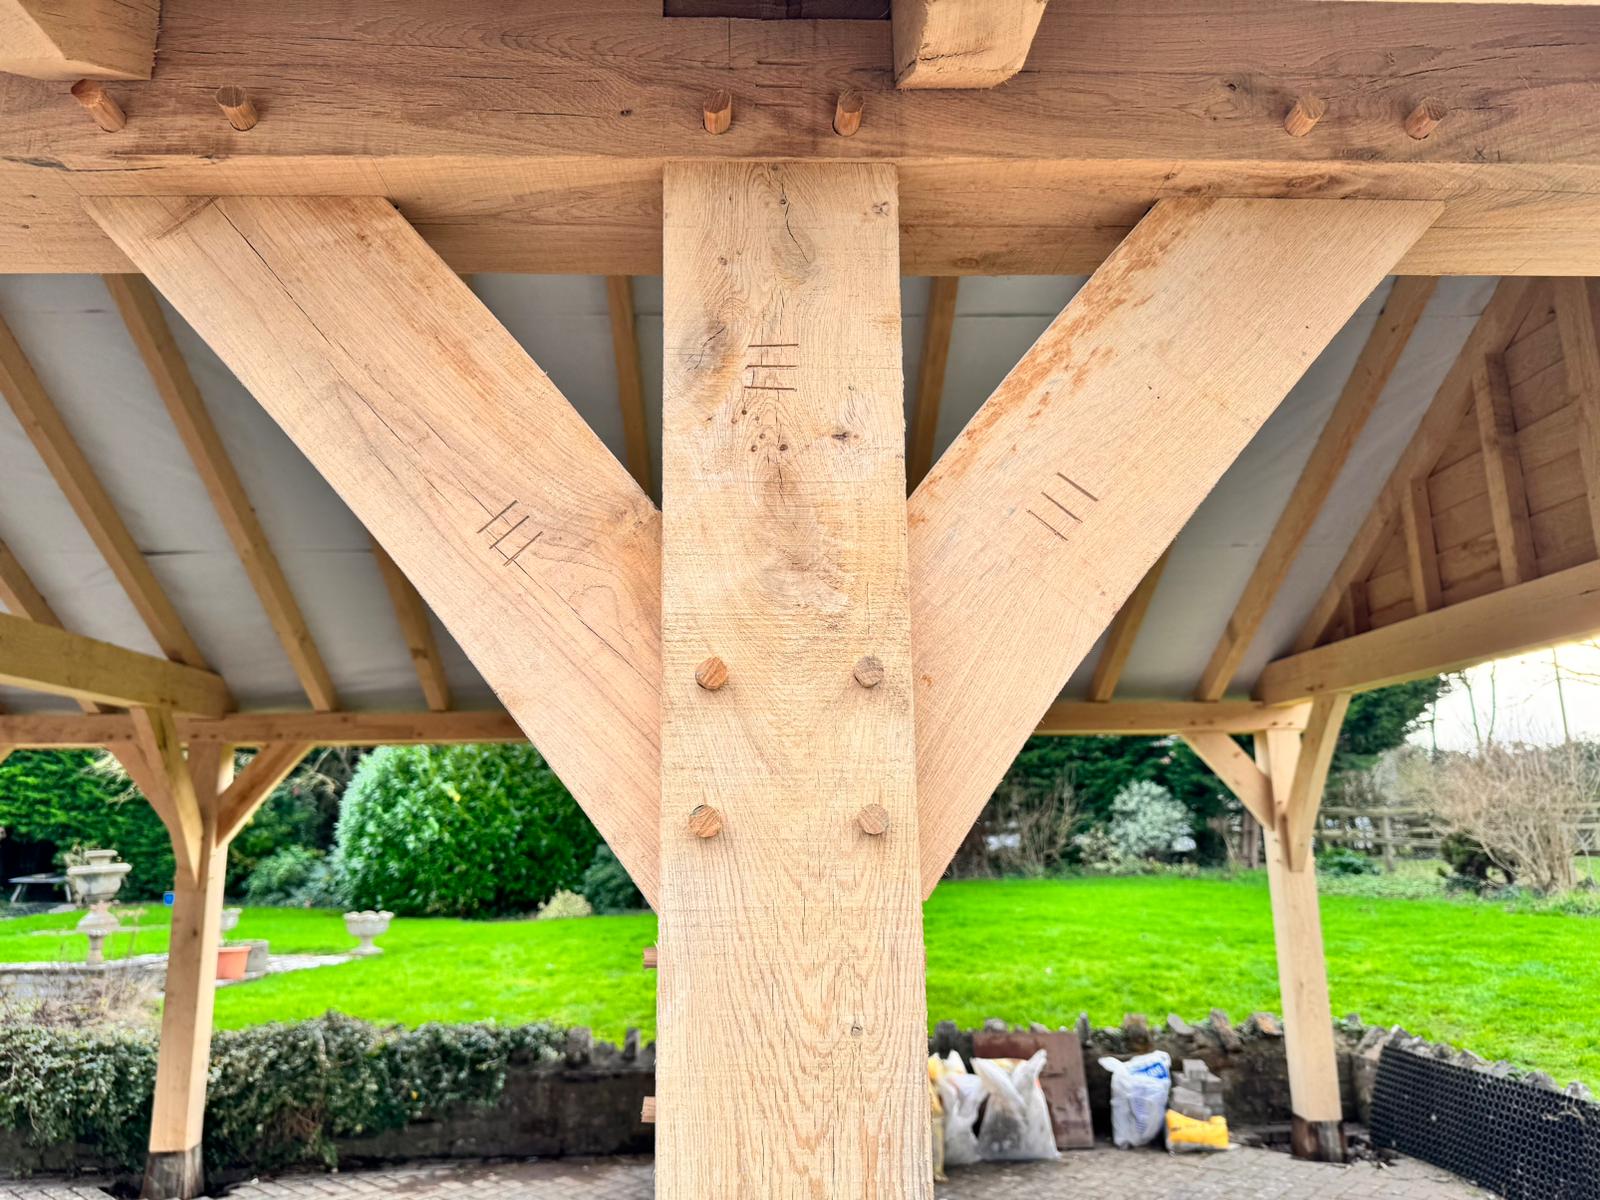 Oak framed joint with carpenters marks